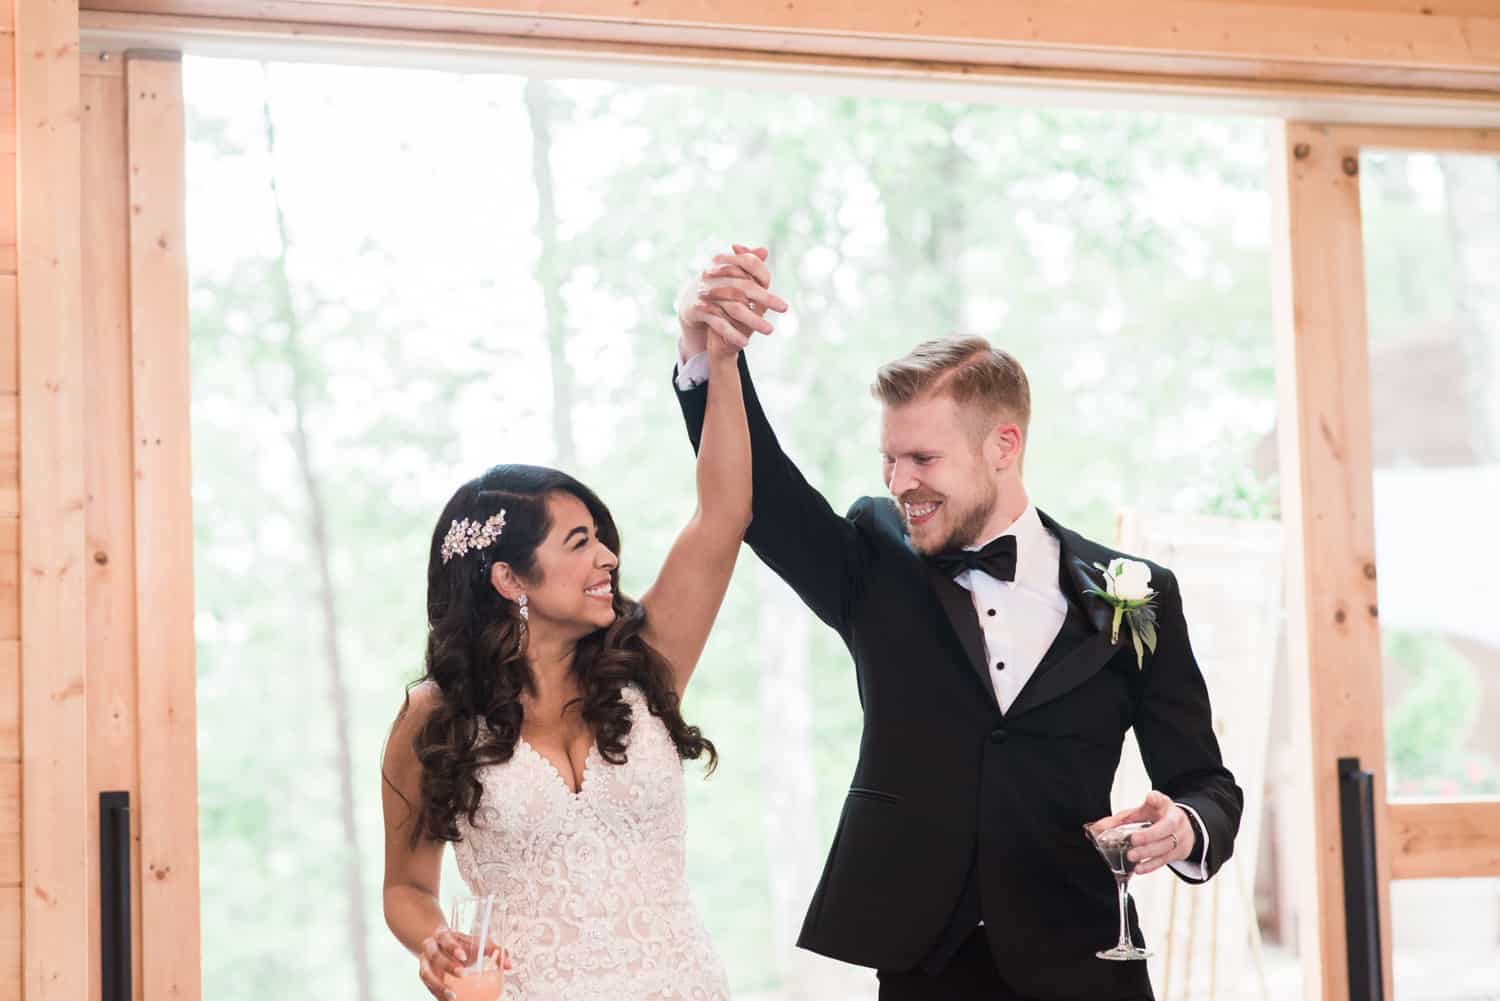 Smoky Mountain Wedding Photographer capturing happy moments